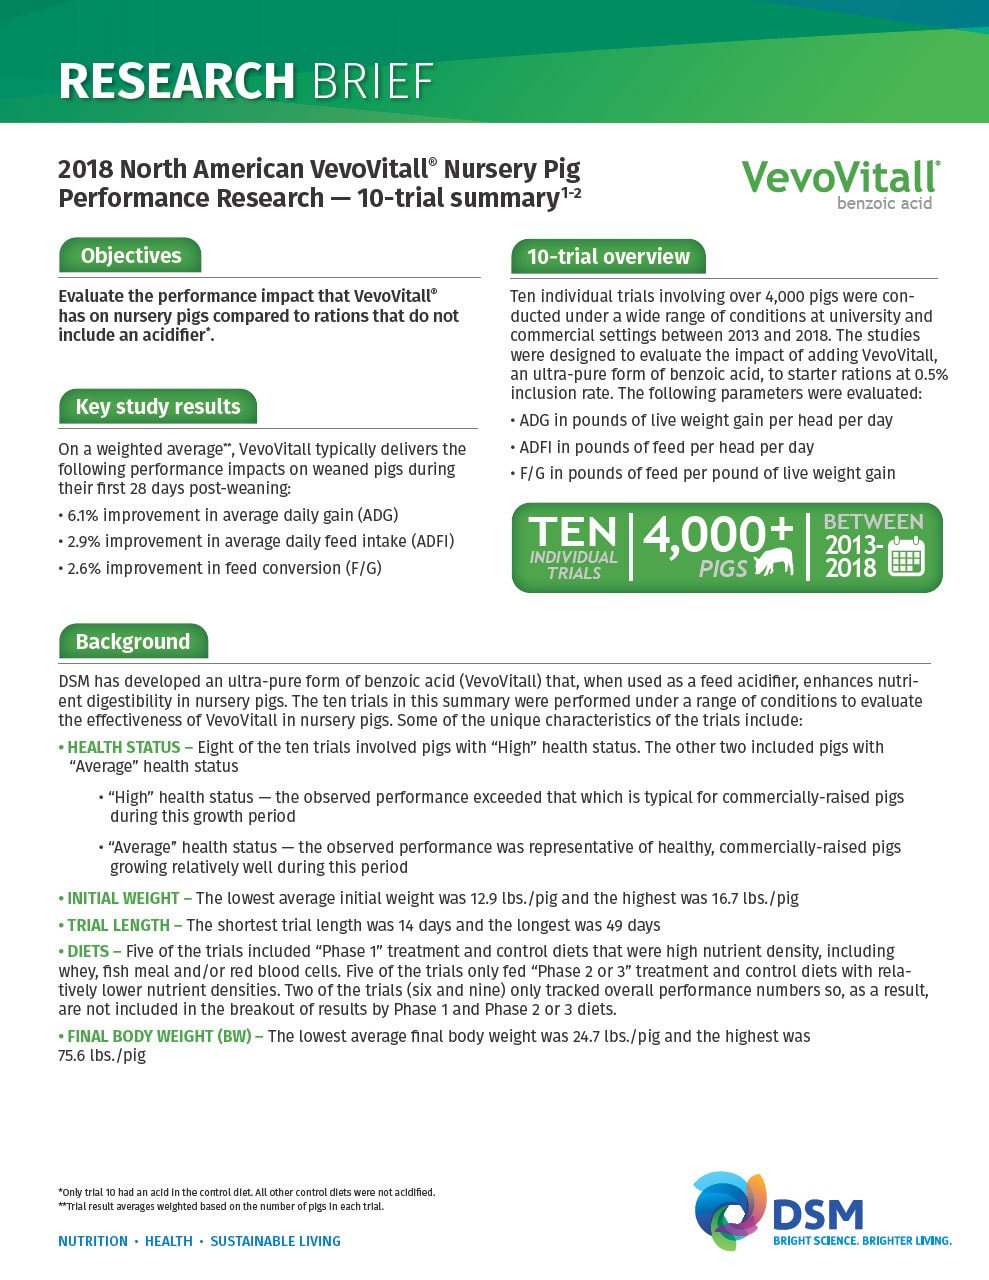 2018 VevoVitall® Nursery Pig Performance Research